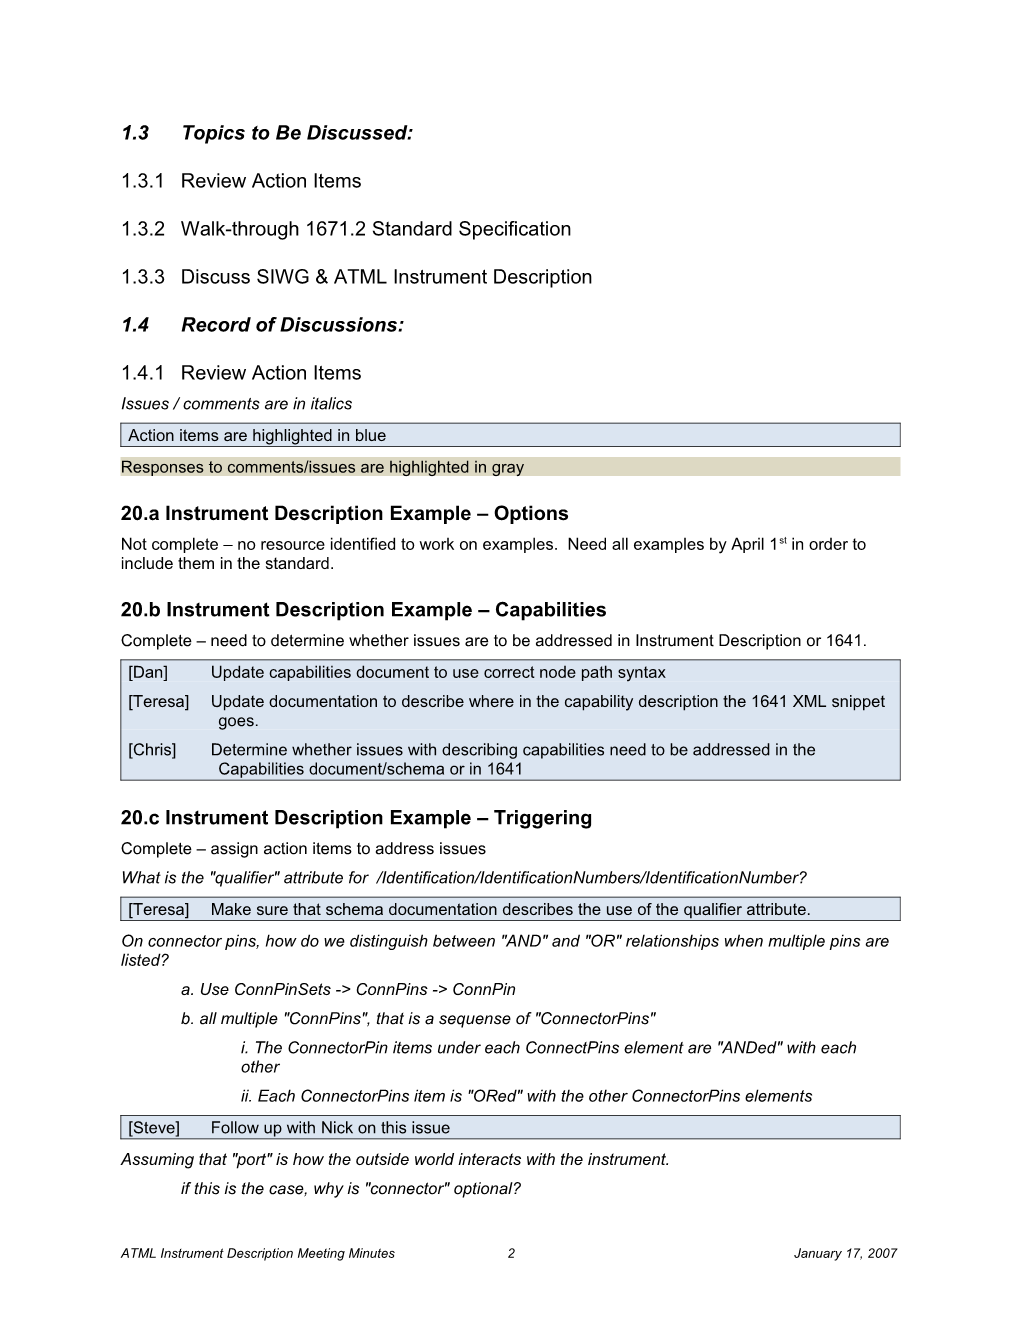 ATML Instrument Description Minutes